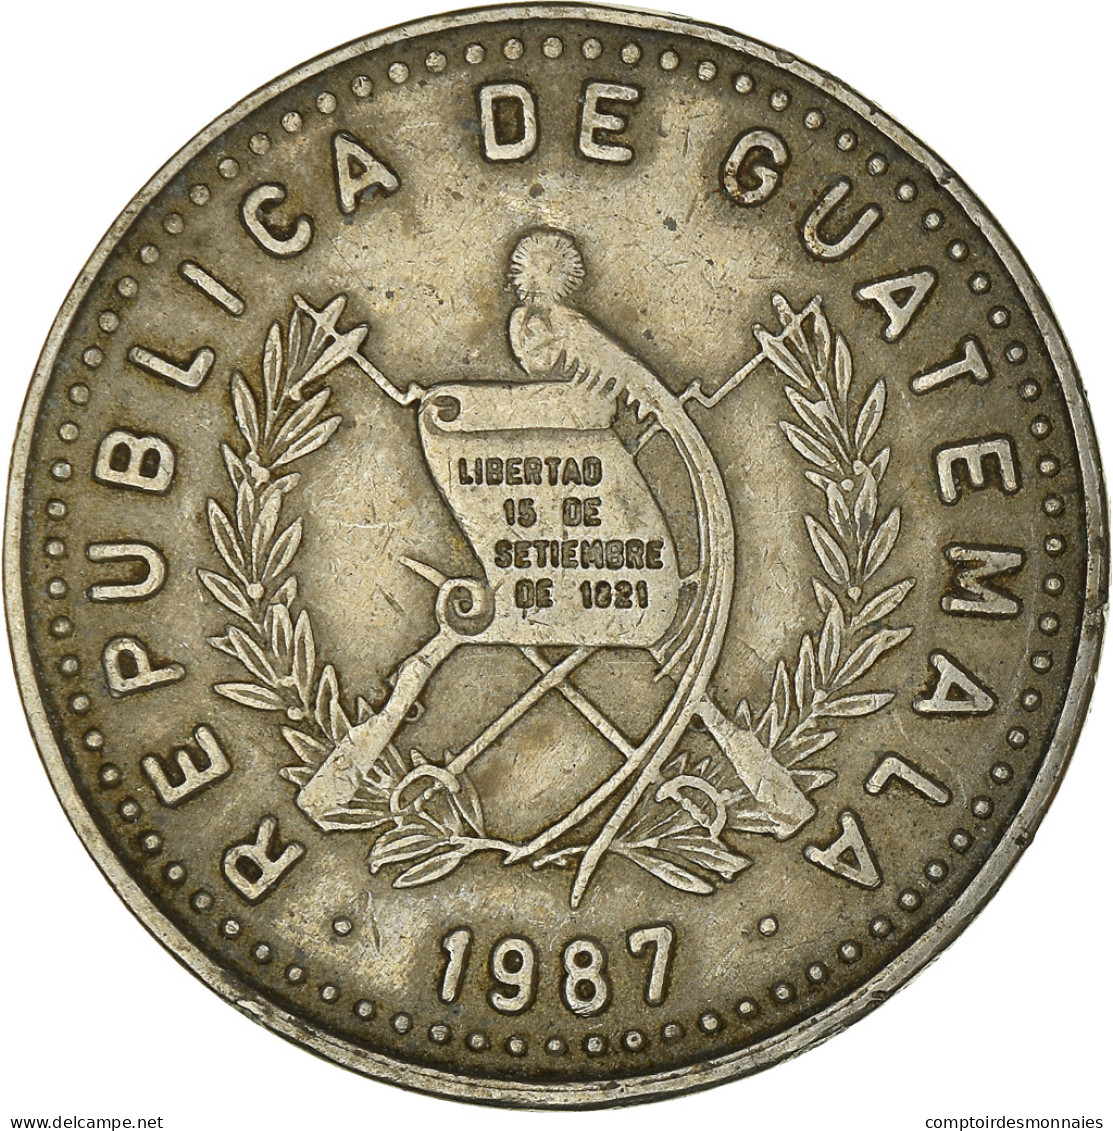 Monnaie, Guatemala, 25 Centavos, 1987, TB+, Cupro-nickel, KM:278.5 - Guatemala